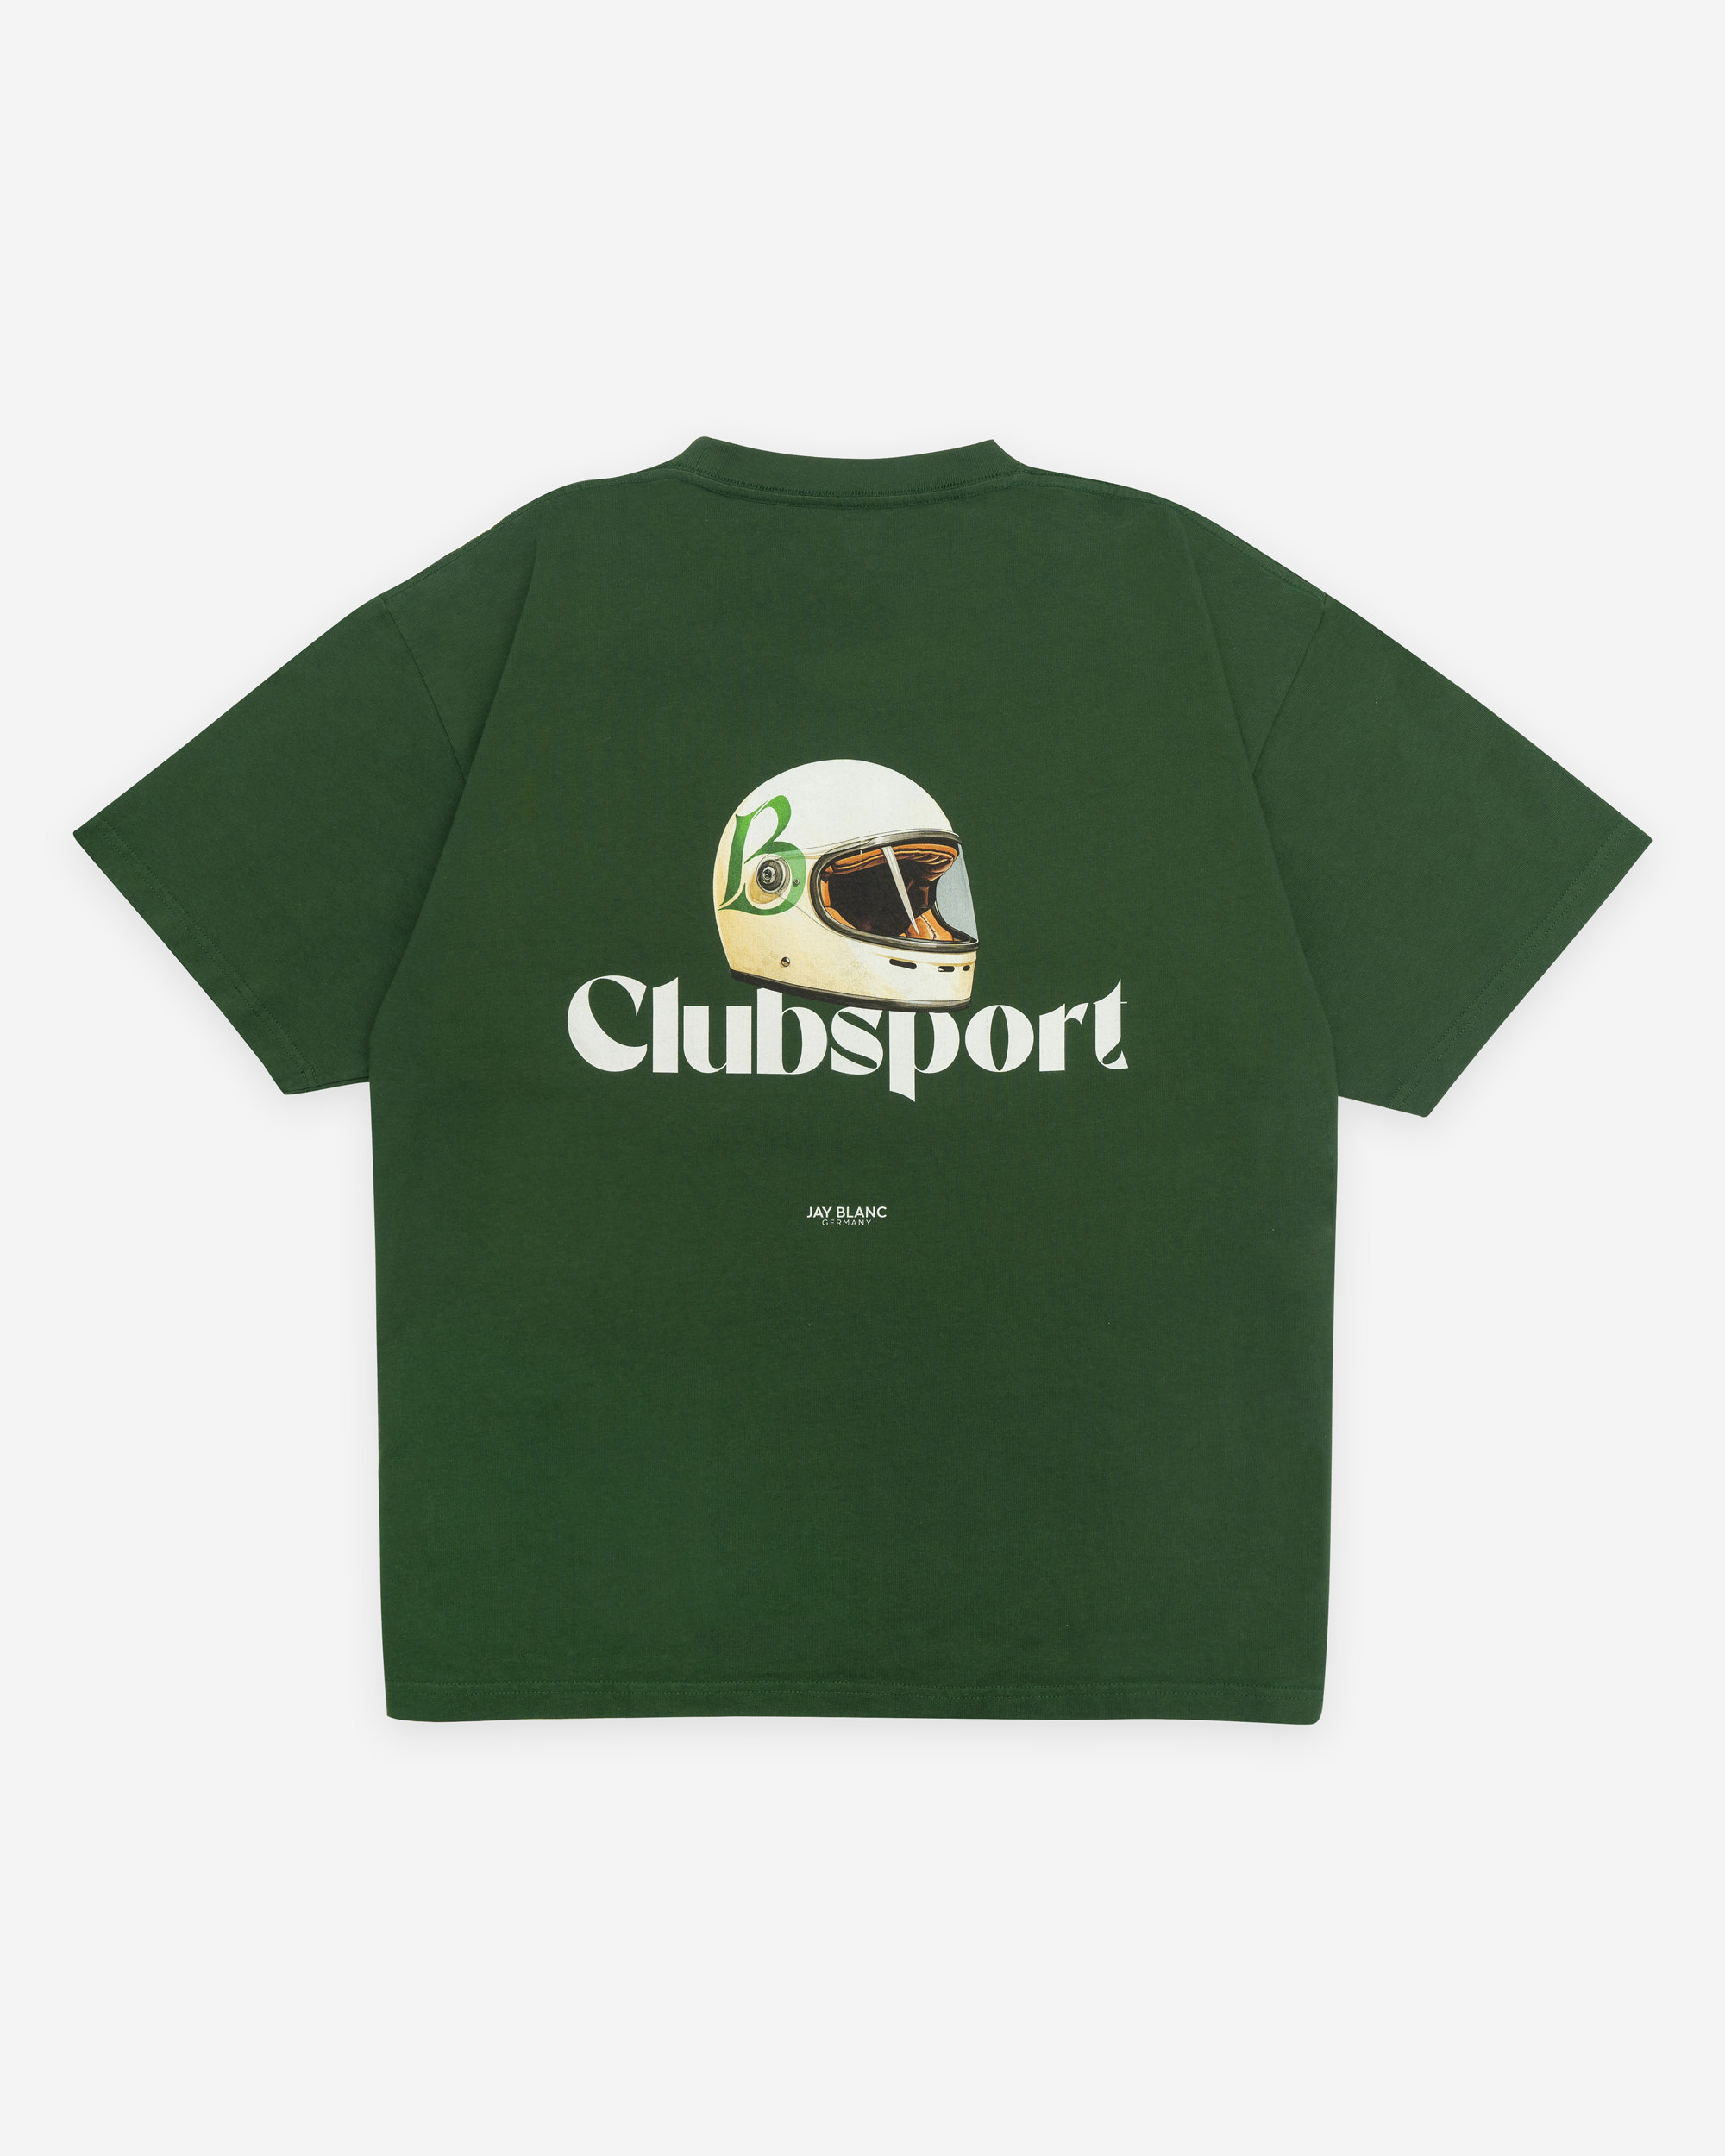 Clubsport T-Shirt - Jay Blanc